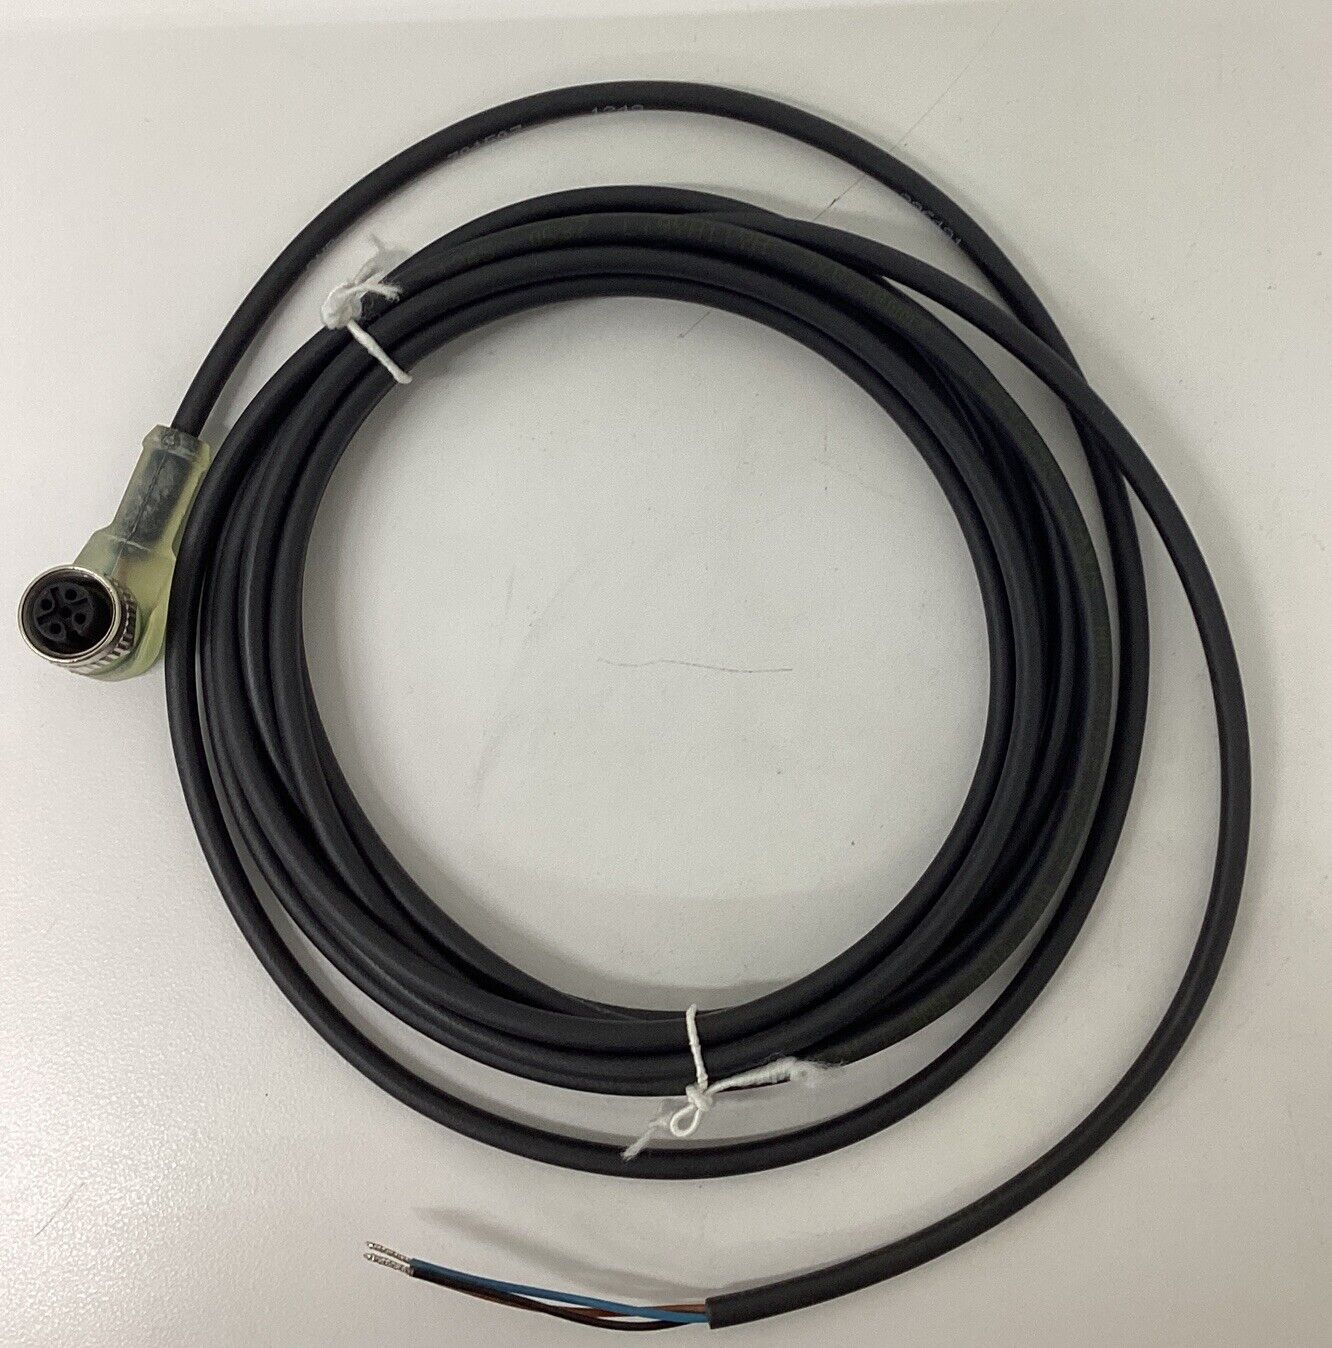 Schunk 0301503 Sensor Cable W3 M12 Pnp (GR210)